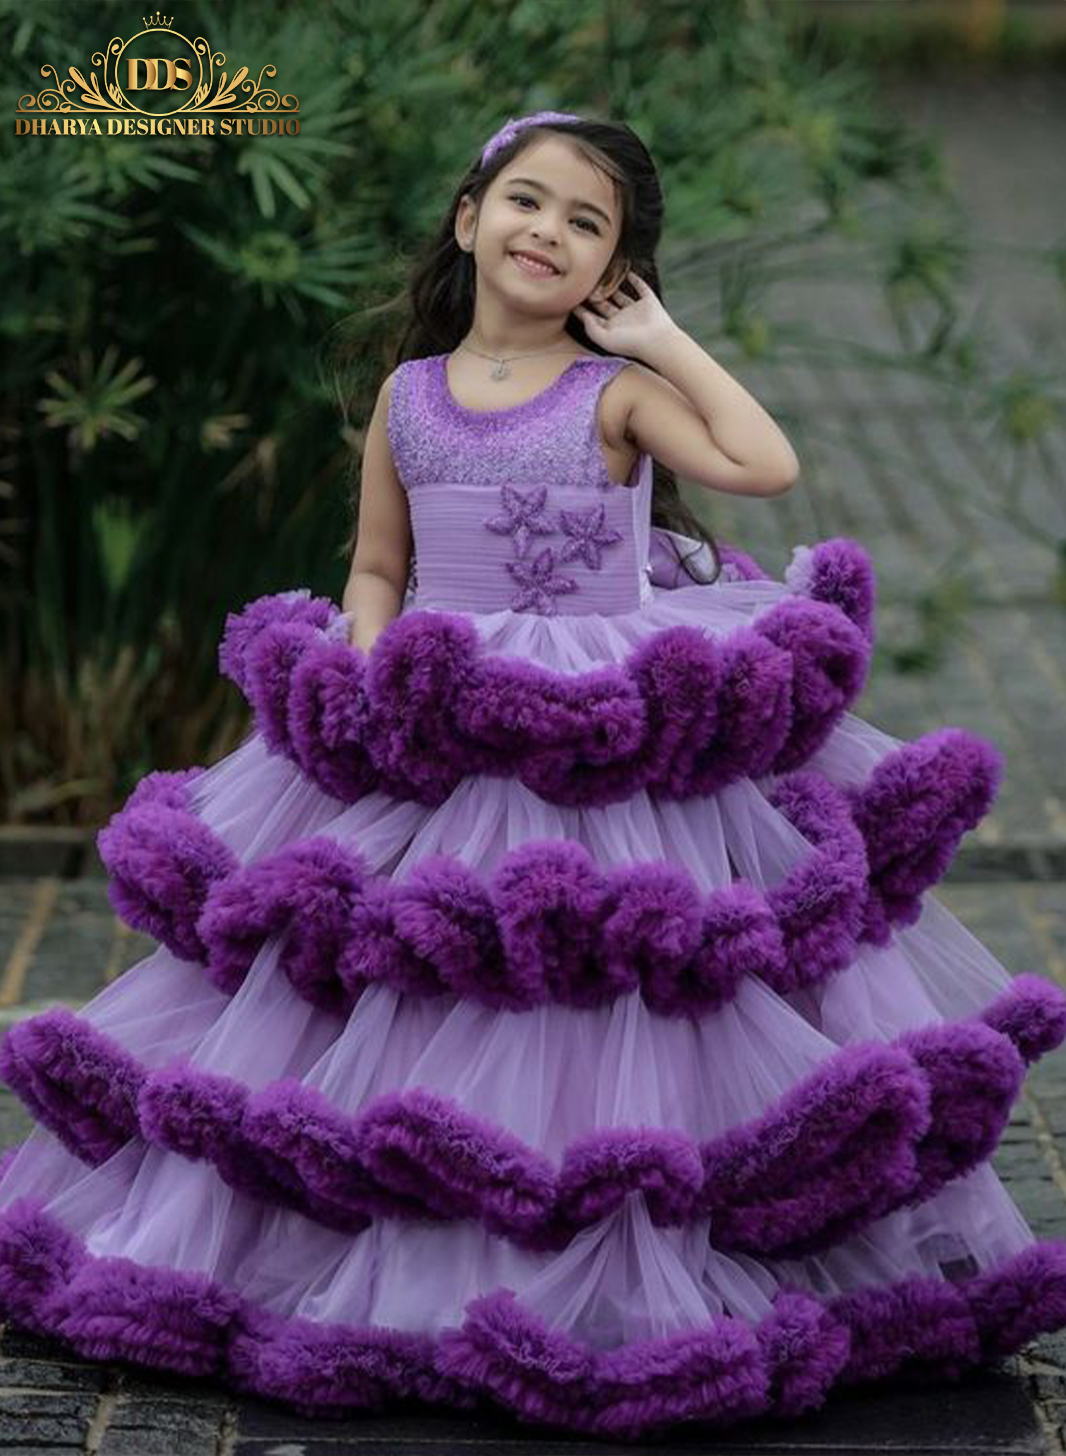 Buy FELIZ THE DESIGNER STUDIO Cotton Silk A-Line Kids Girls Dress  (RED-PENCILA 3-4 Years) at Amazon.in